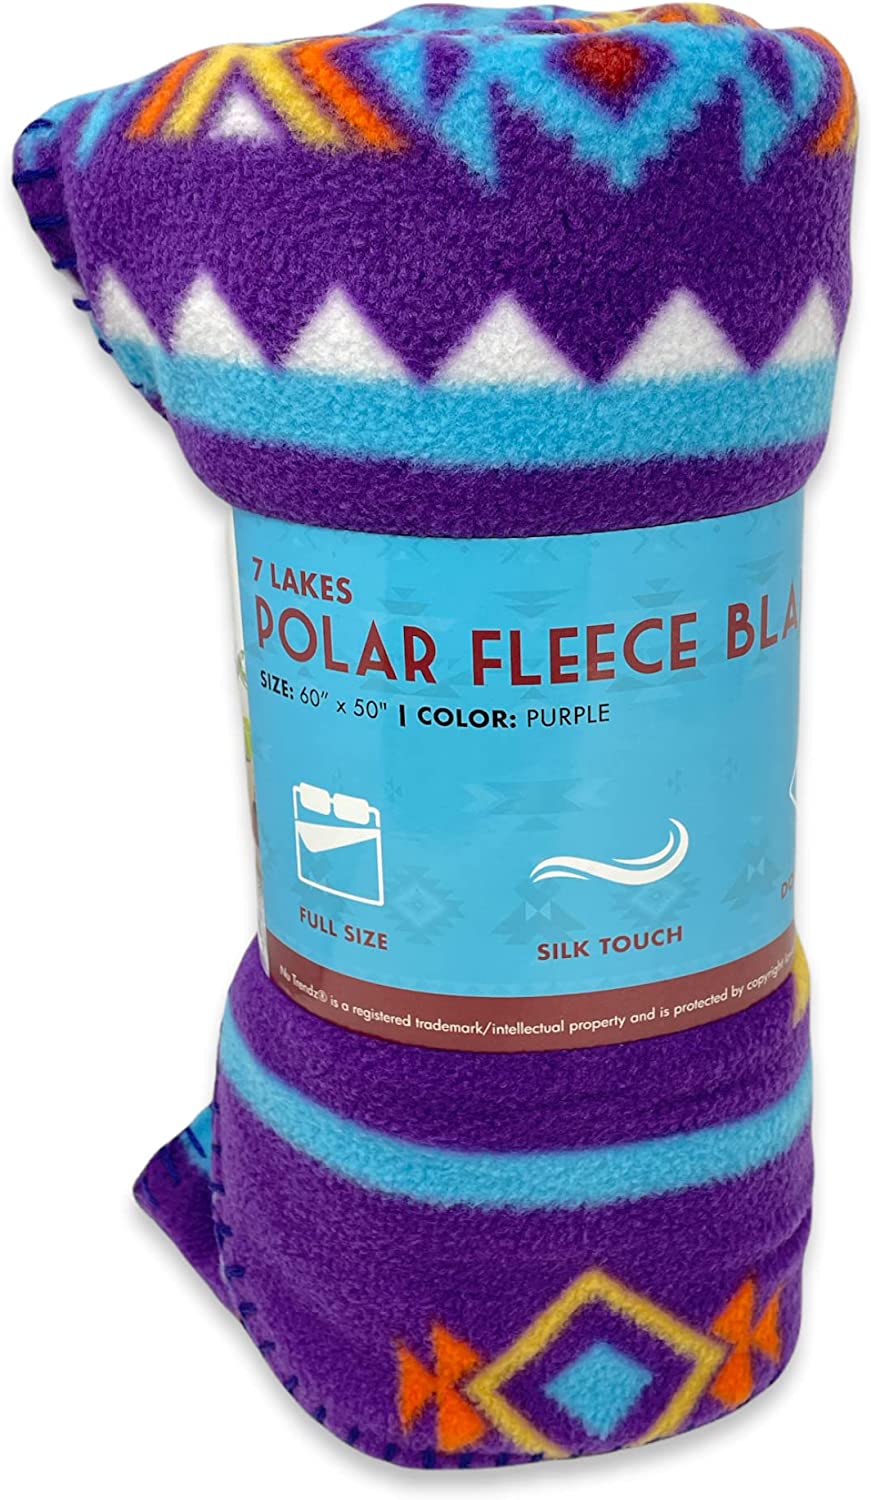 Purple Brand Fleece Flared Pant-BLACK - Civilized Nation